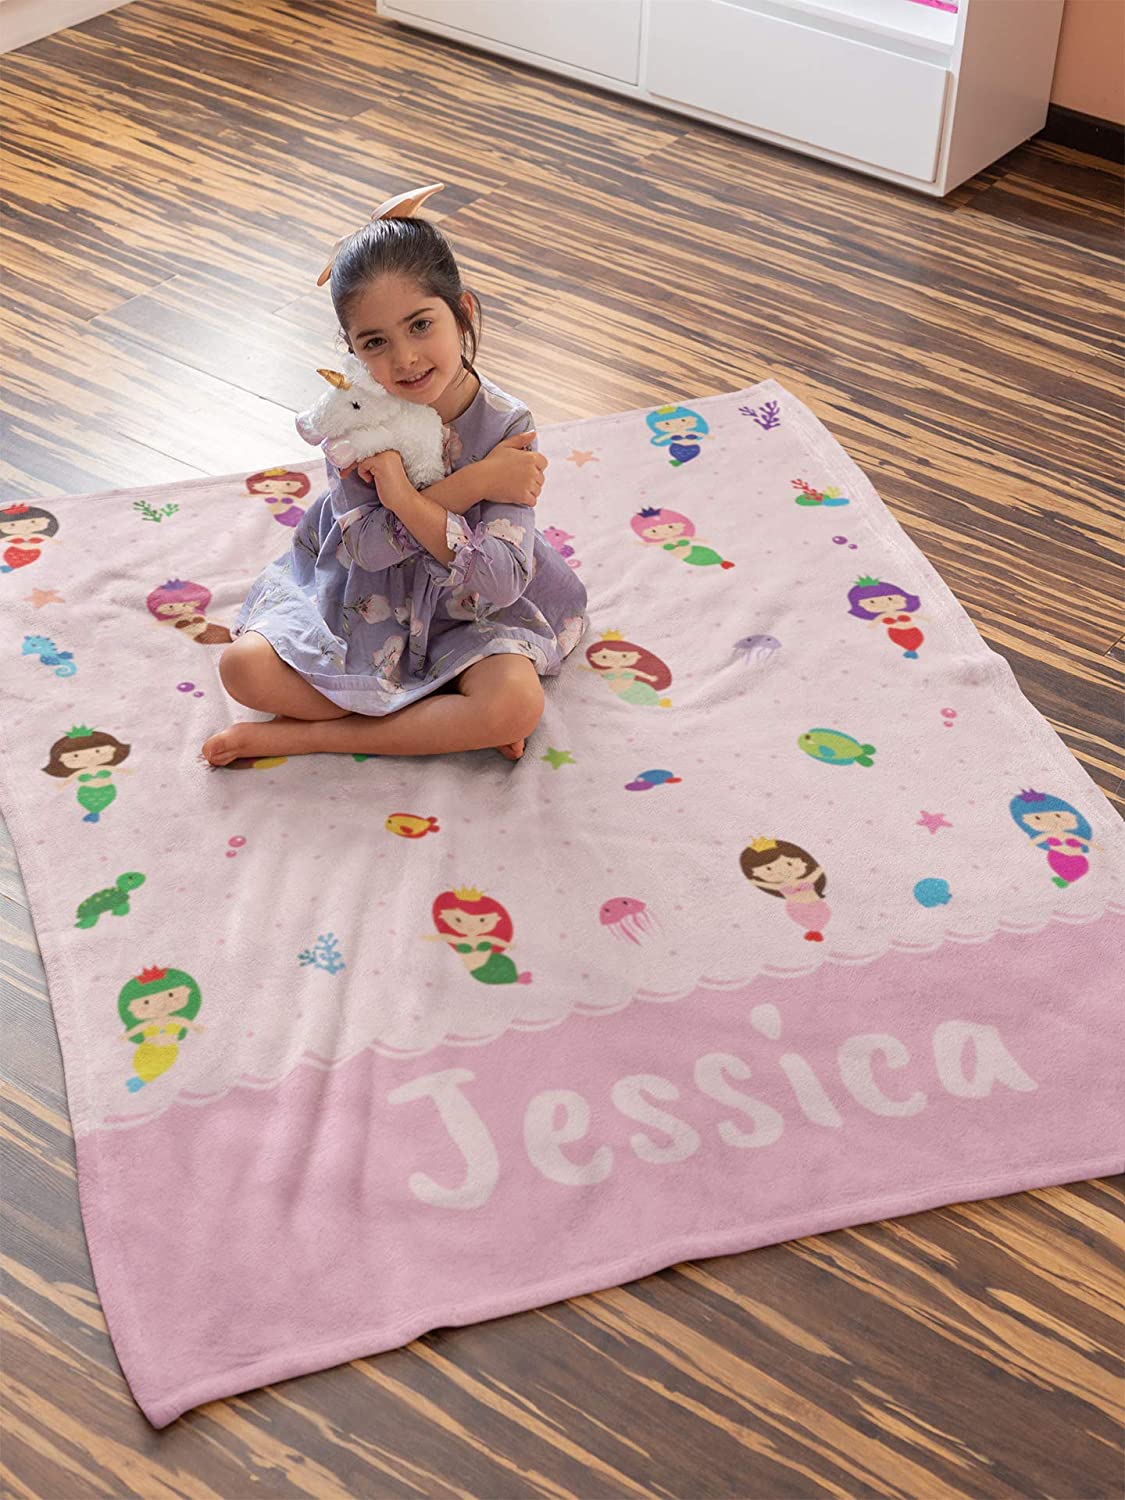 Personalized Custom Cozy Plush Fleece Blanket (Mermaid), Ships from US - Add Your Name - Customizable Throw Keepsake Blanket Babies, Boys, Girls, Toddlers...